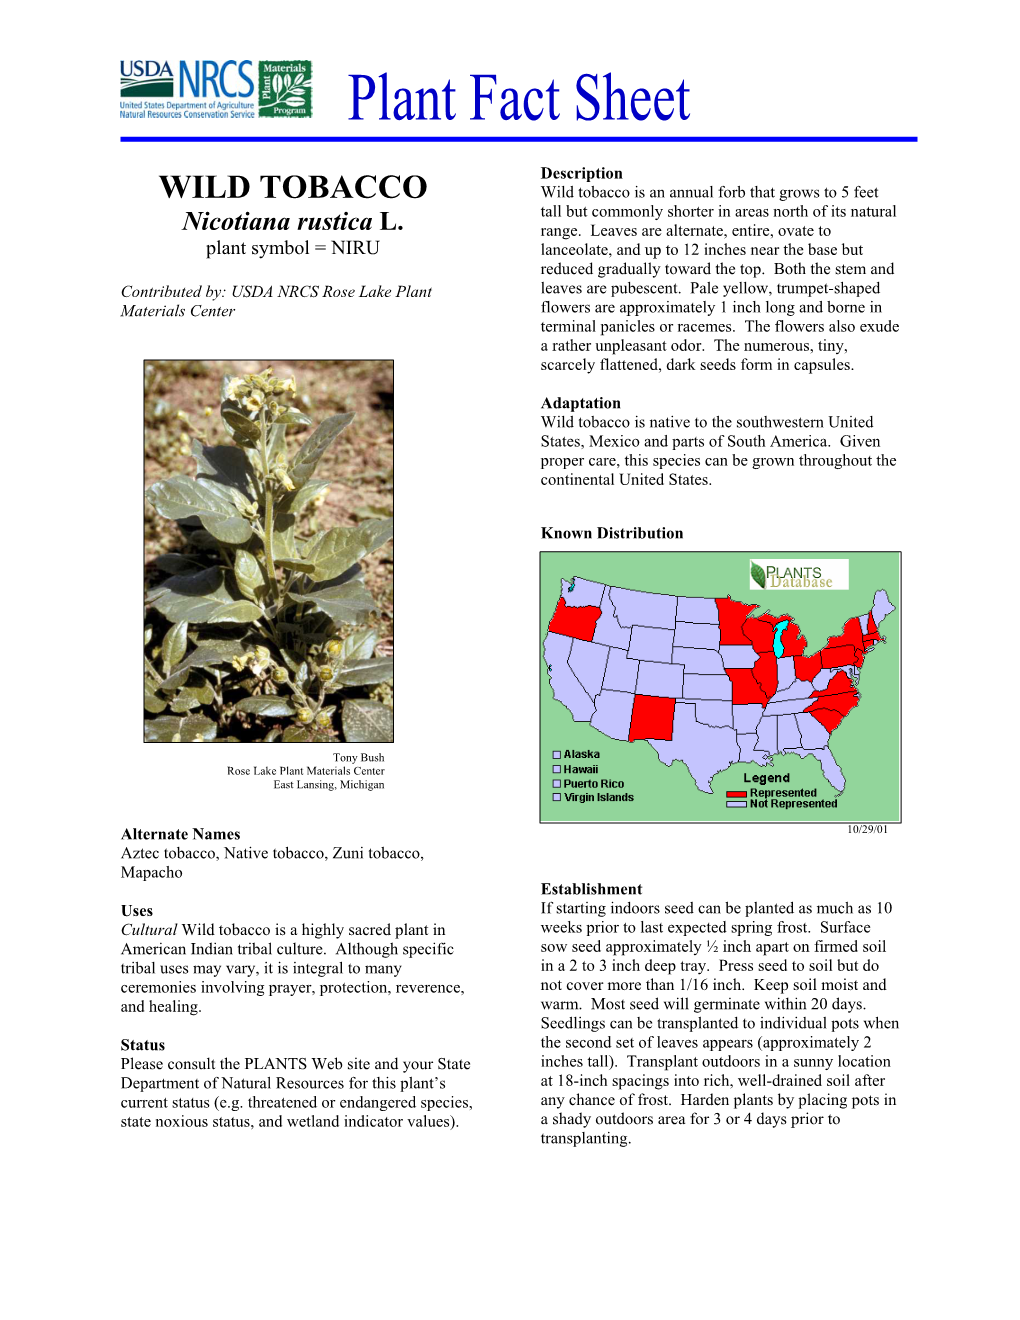 Wild Tobacco Plant Fact Sheet